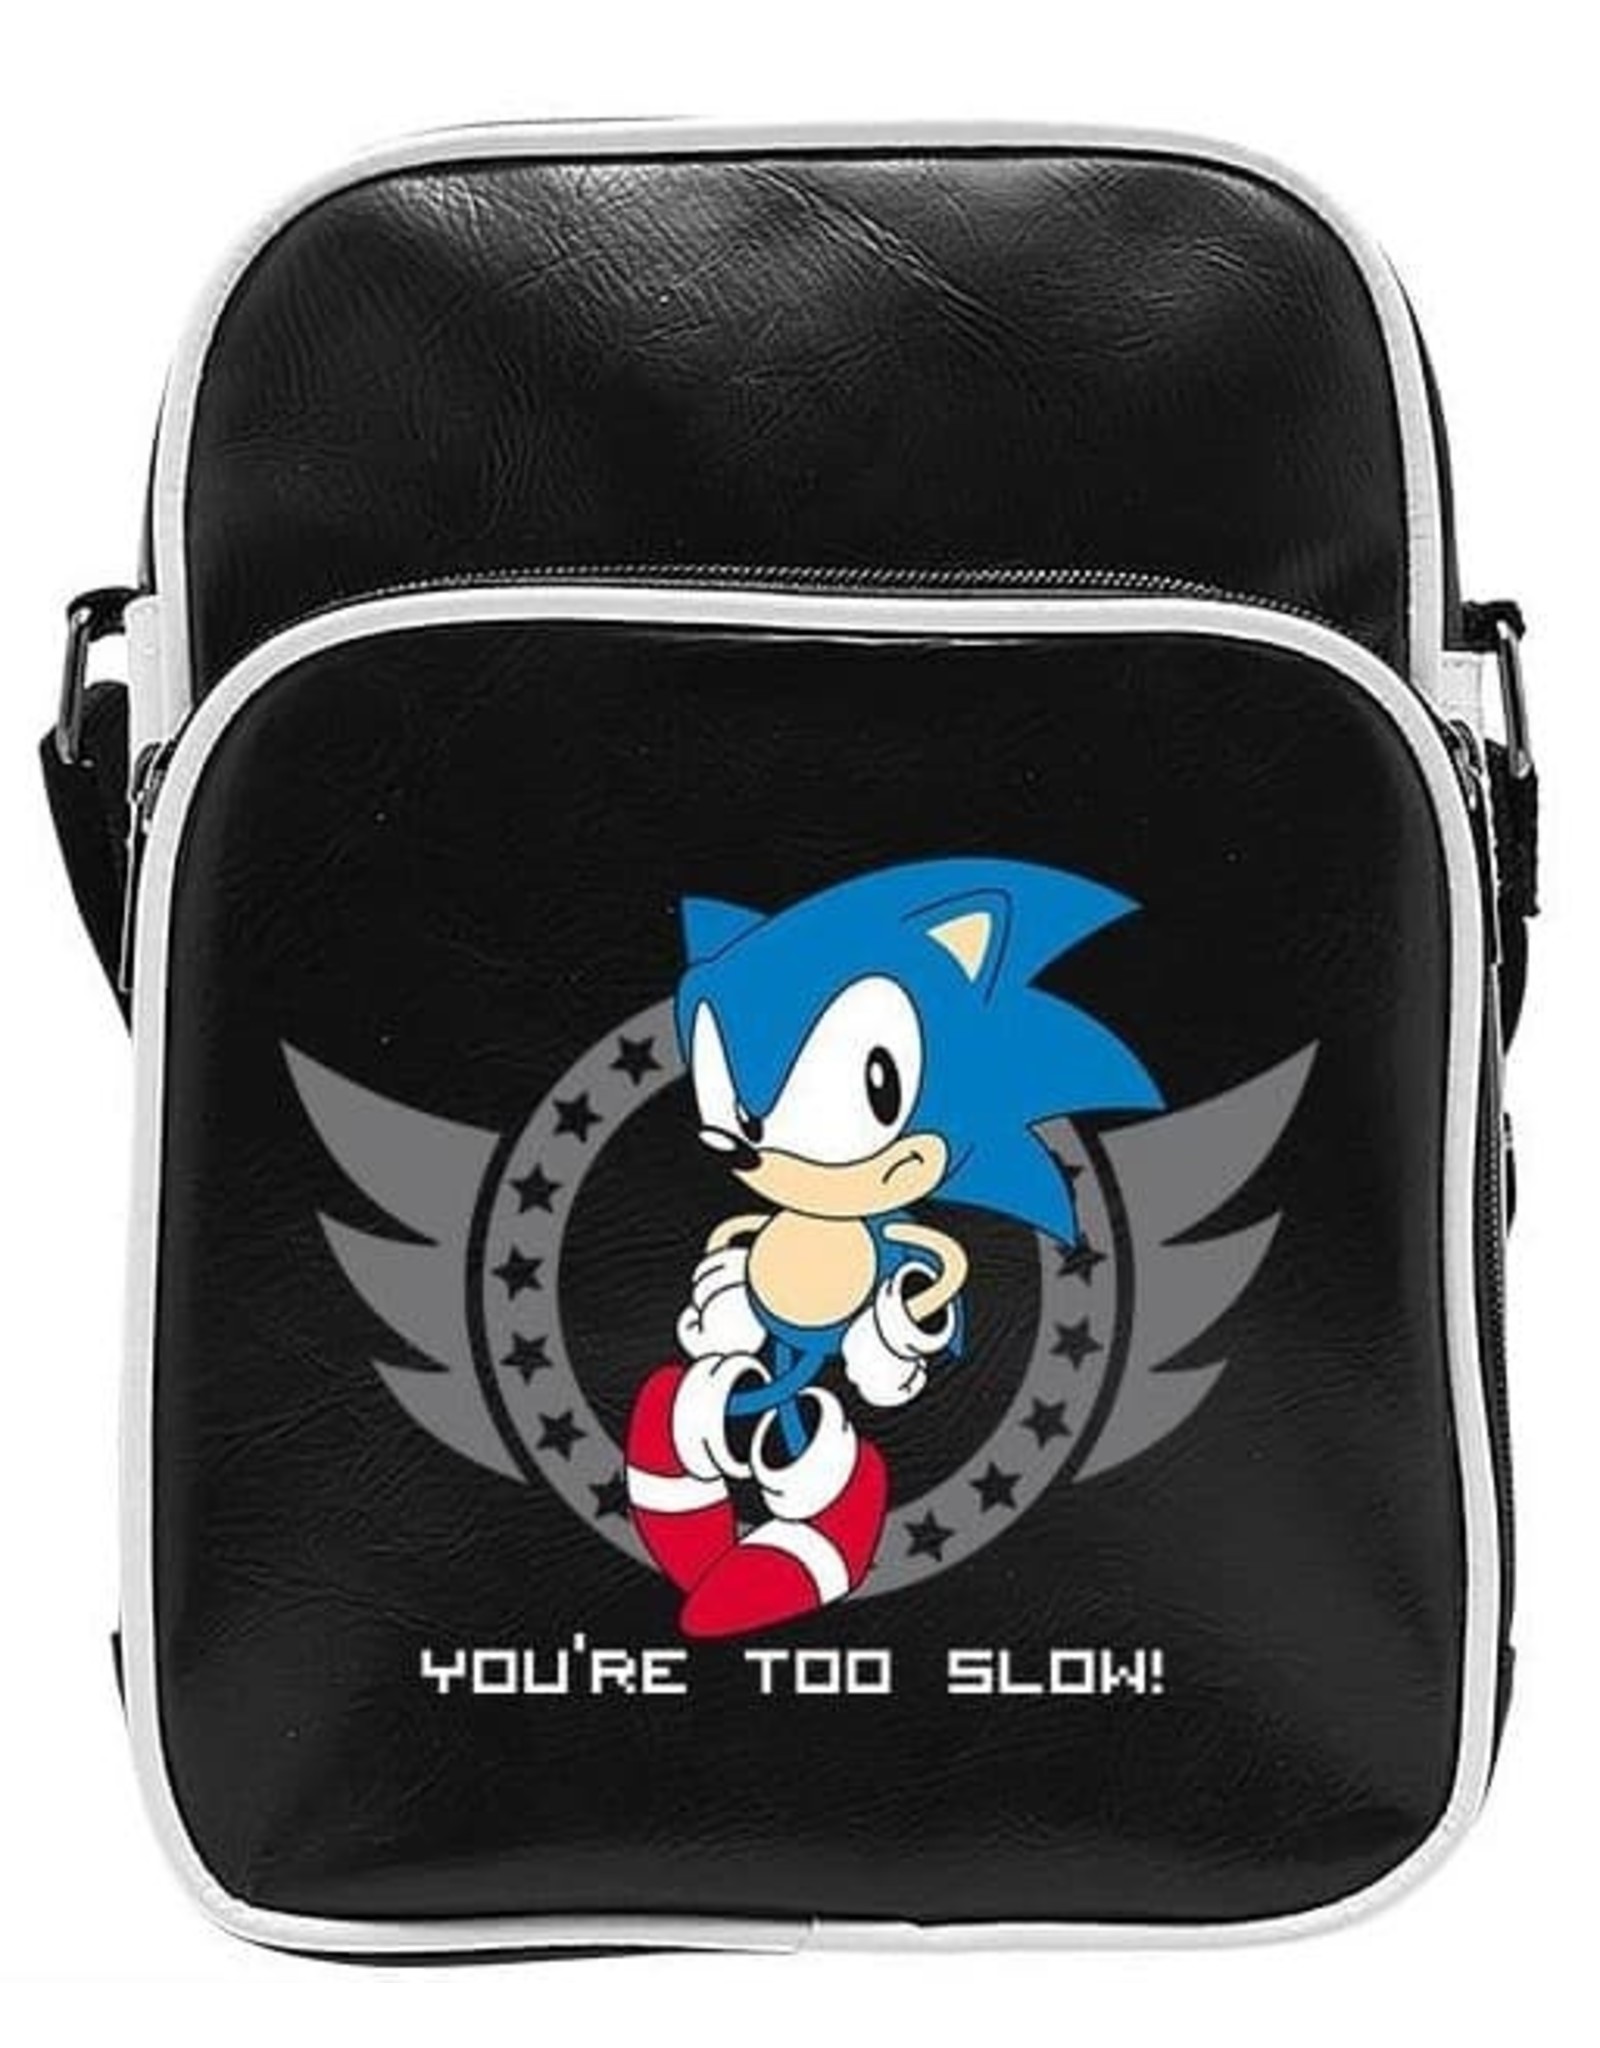 Sonic Merchandise bags - Sonic Too Slow Messenger bag